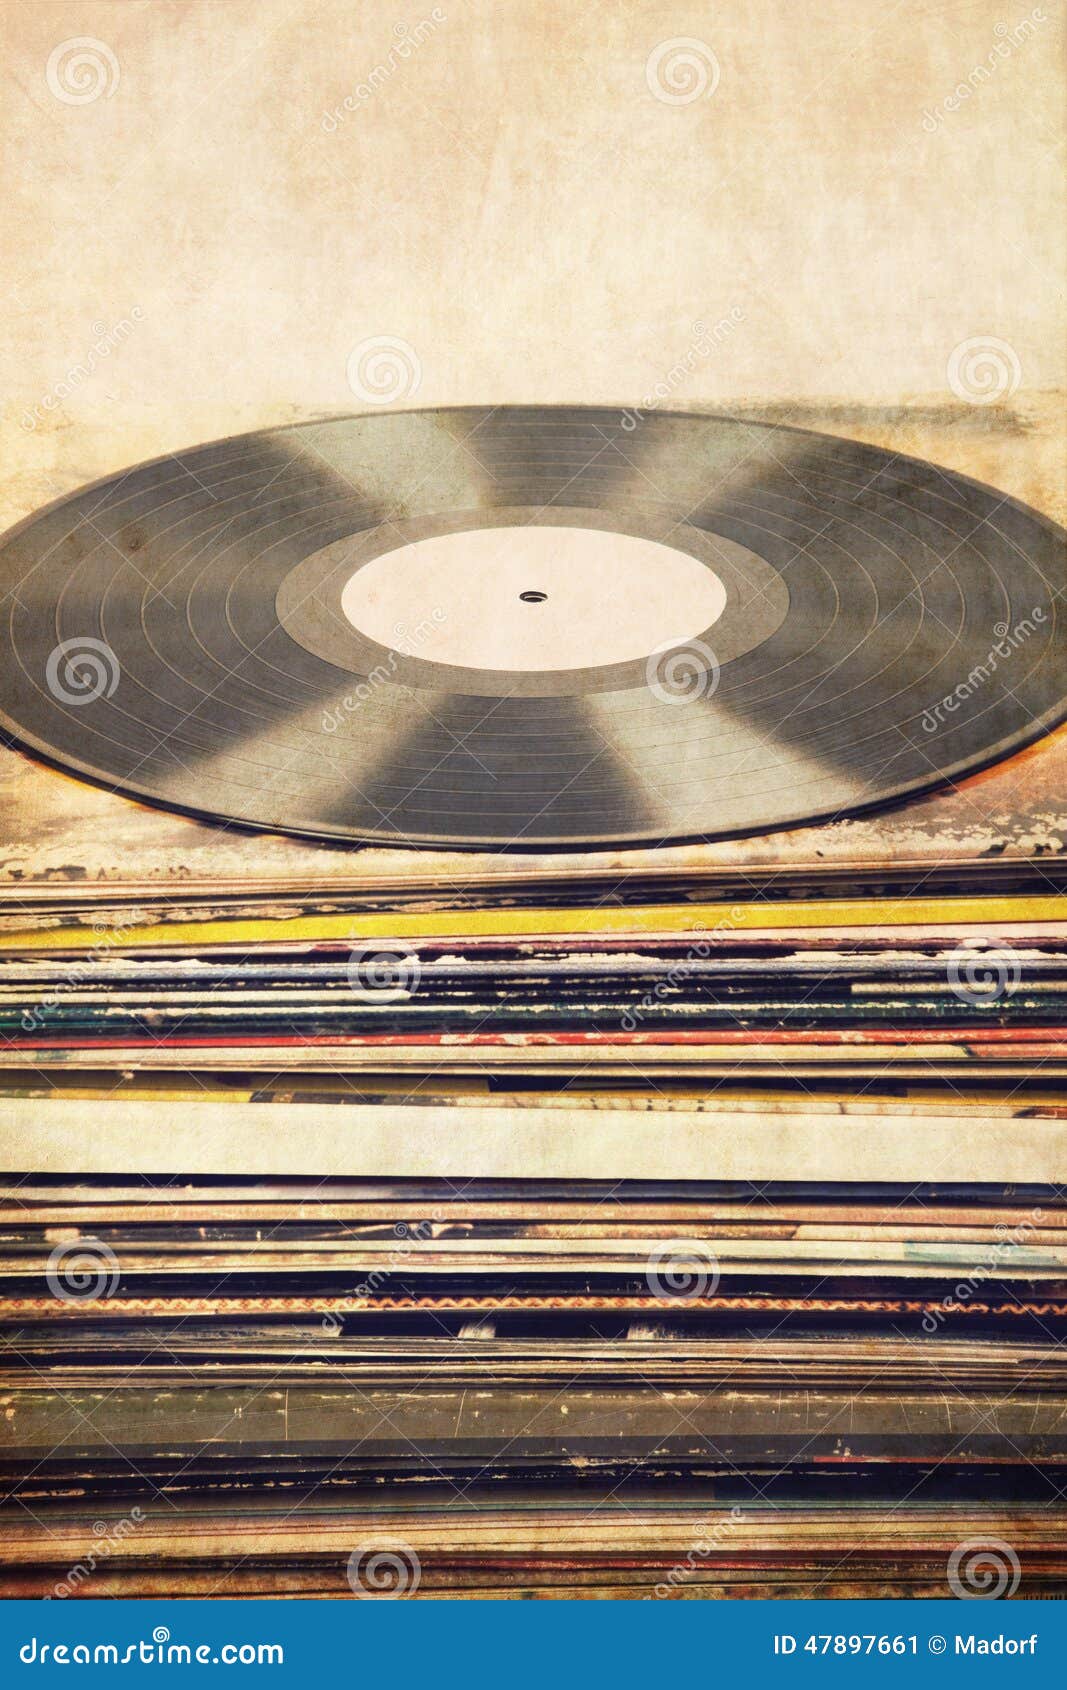 Vinyl Record On Tower Of Album Covers Textured Background Retro